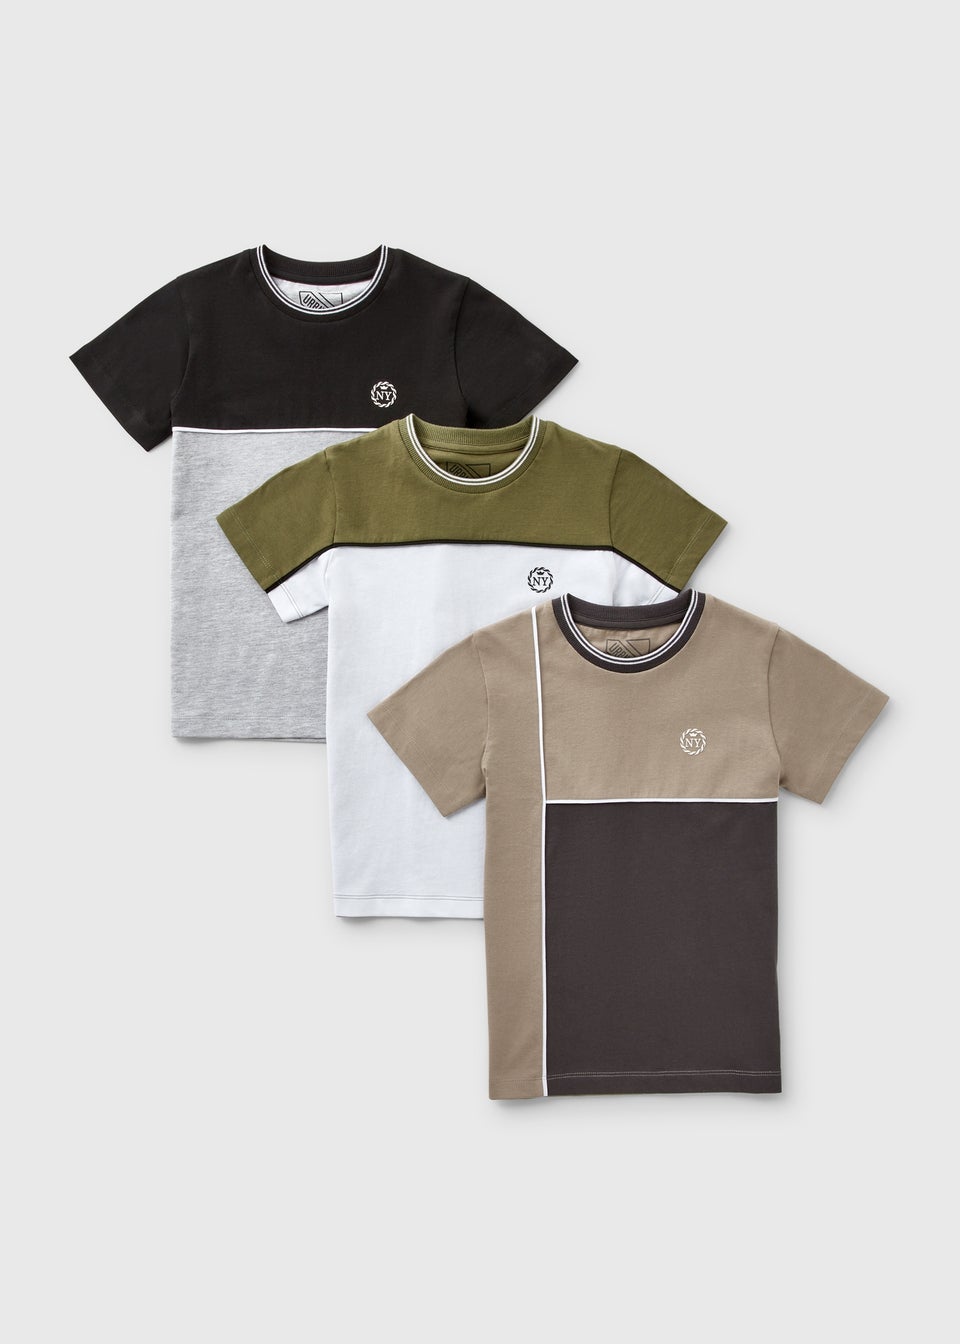 Boys Black Grey & White Cut & Sew T-Shirts (7-13yrs)